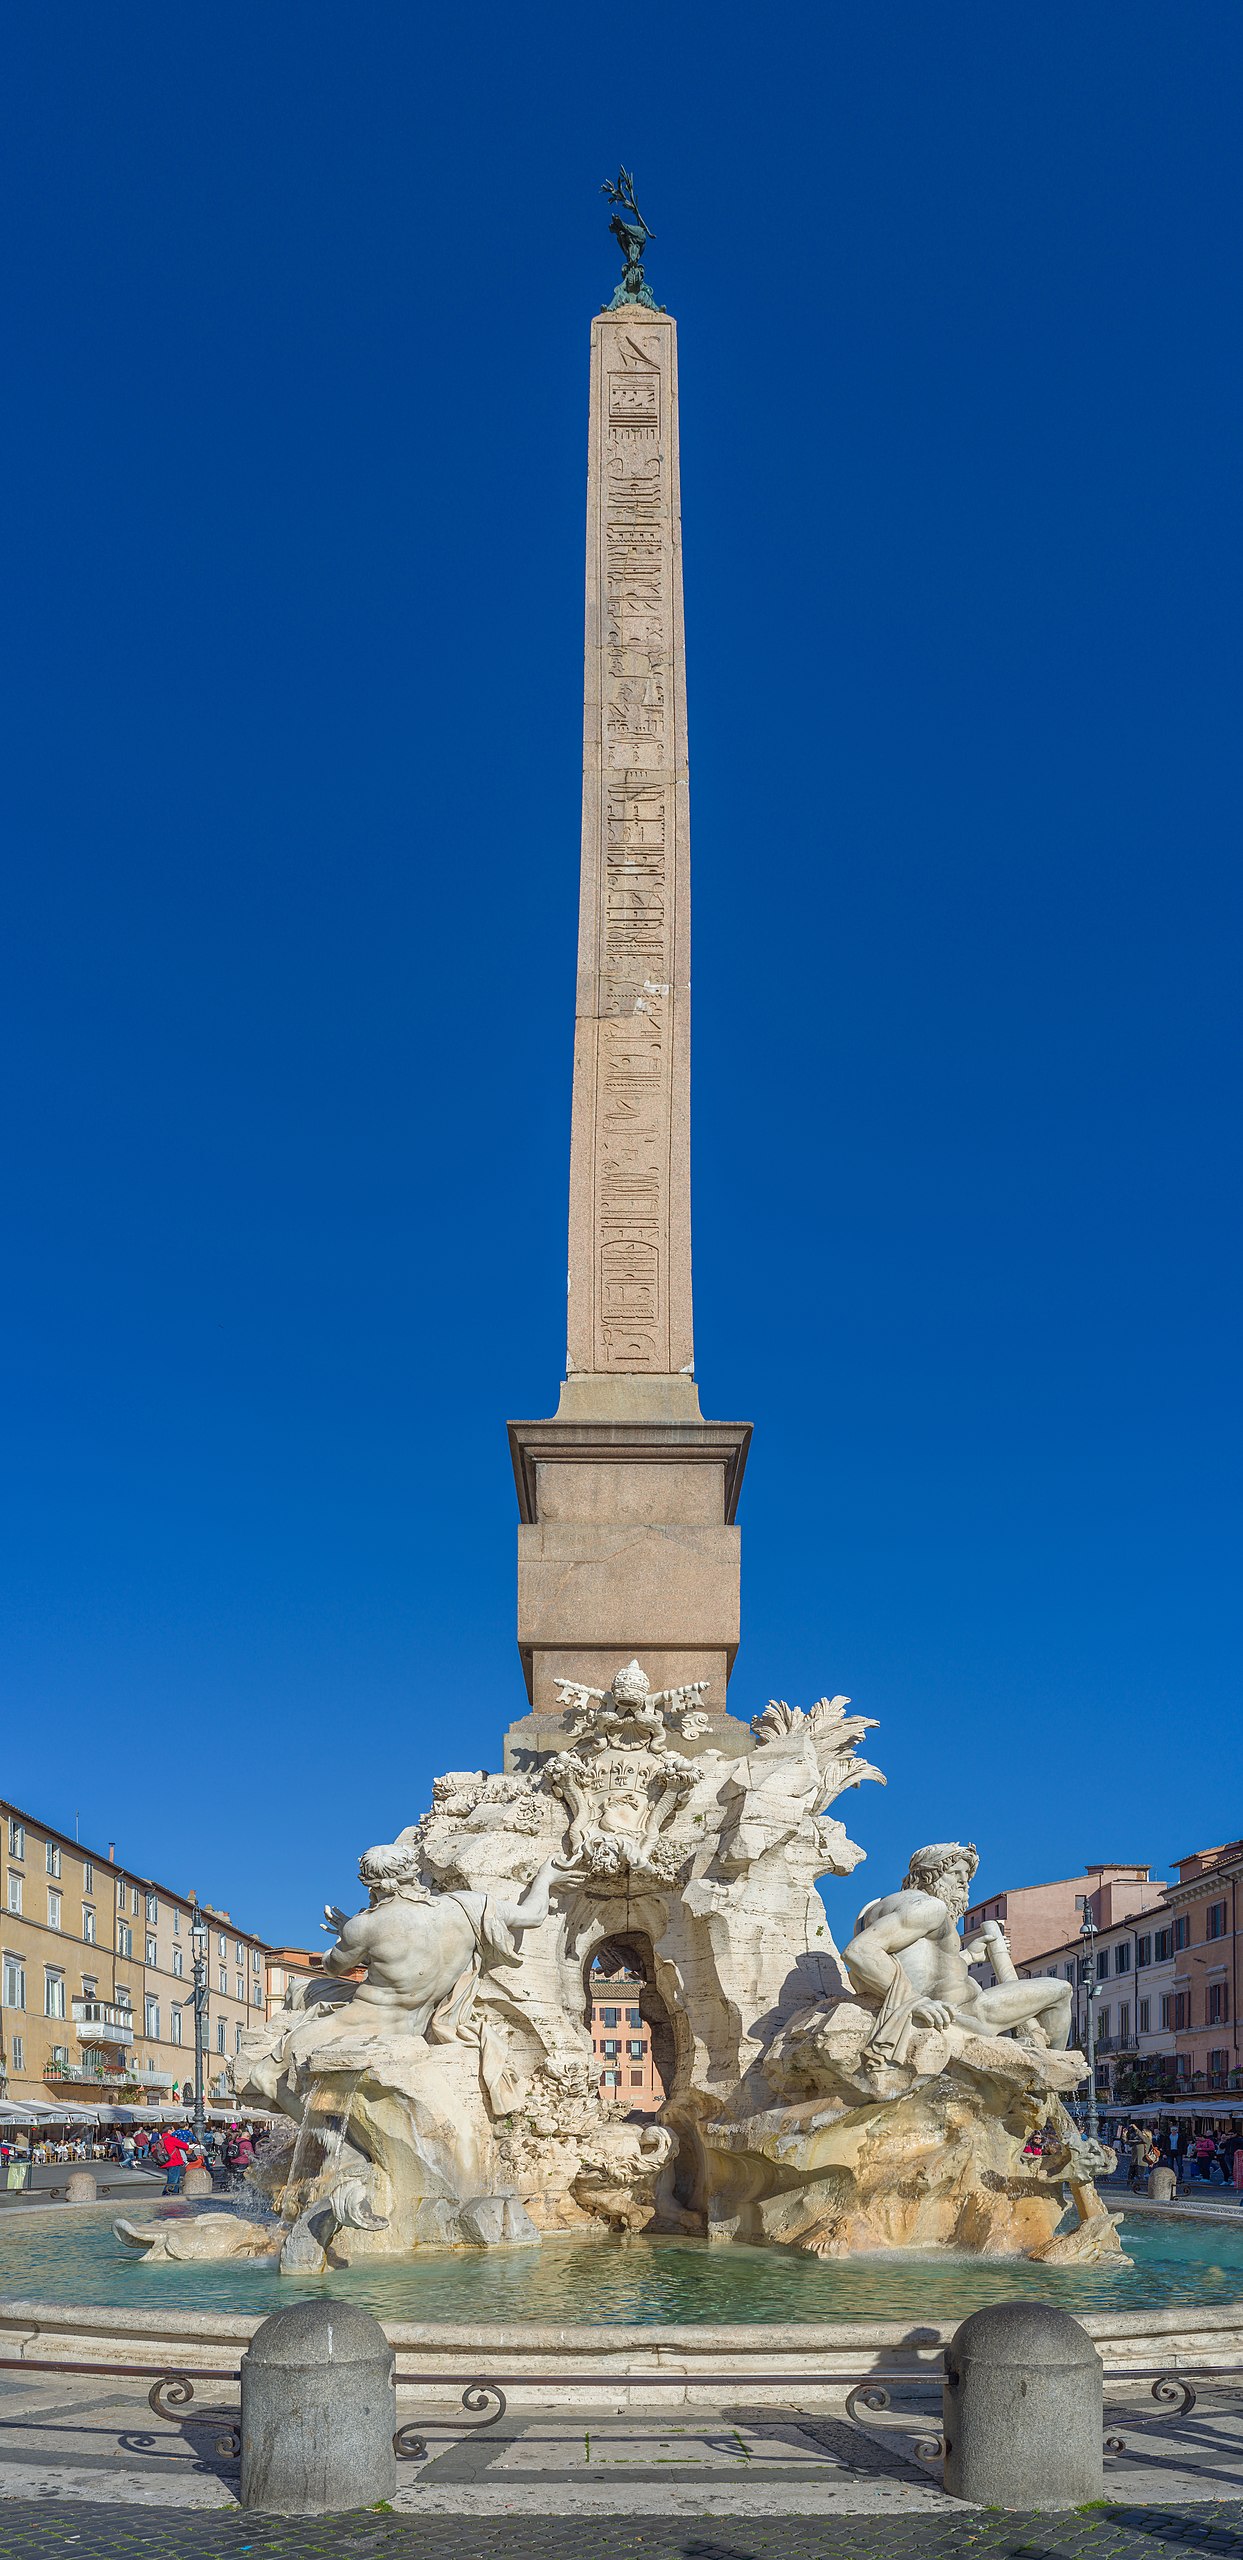 https://upload.wikimedia.org/wikipedia/commons/thumb/a/a5/Obelisco_Fontana_dei_Fiumi_Piazza_Navona_Roma.jpg/1243px-Obelisco_Fontana_dei_Fiumi_Piazza_Navona_Roma.jpg